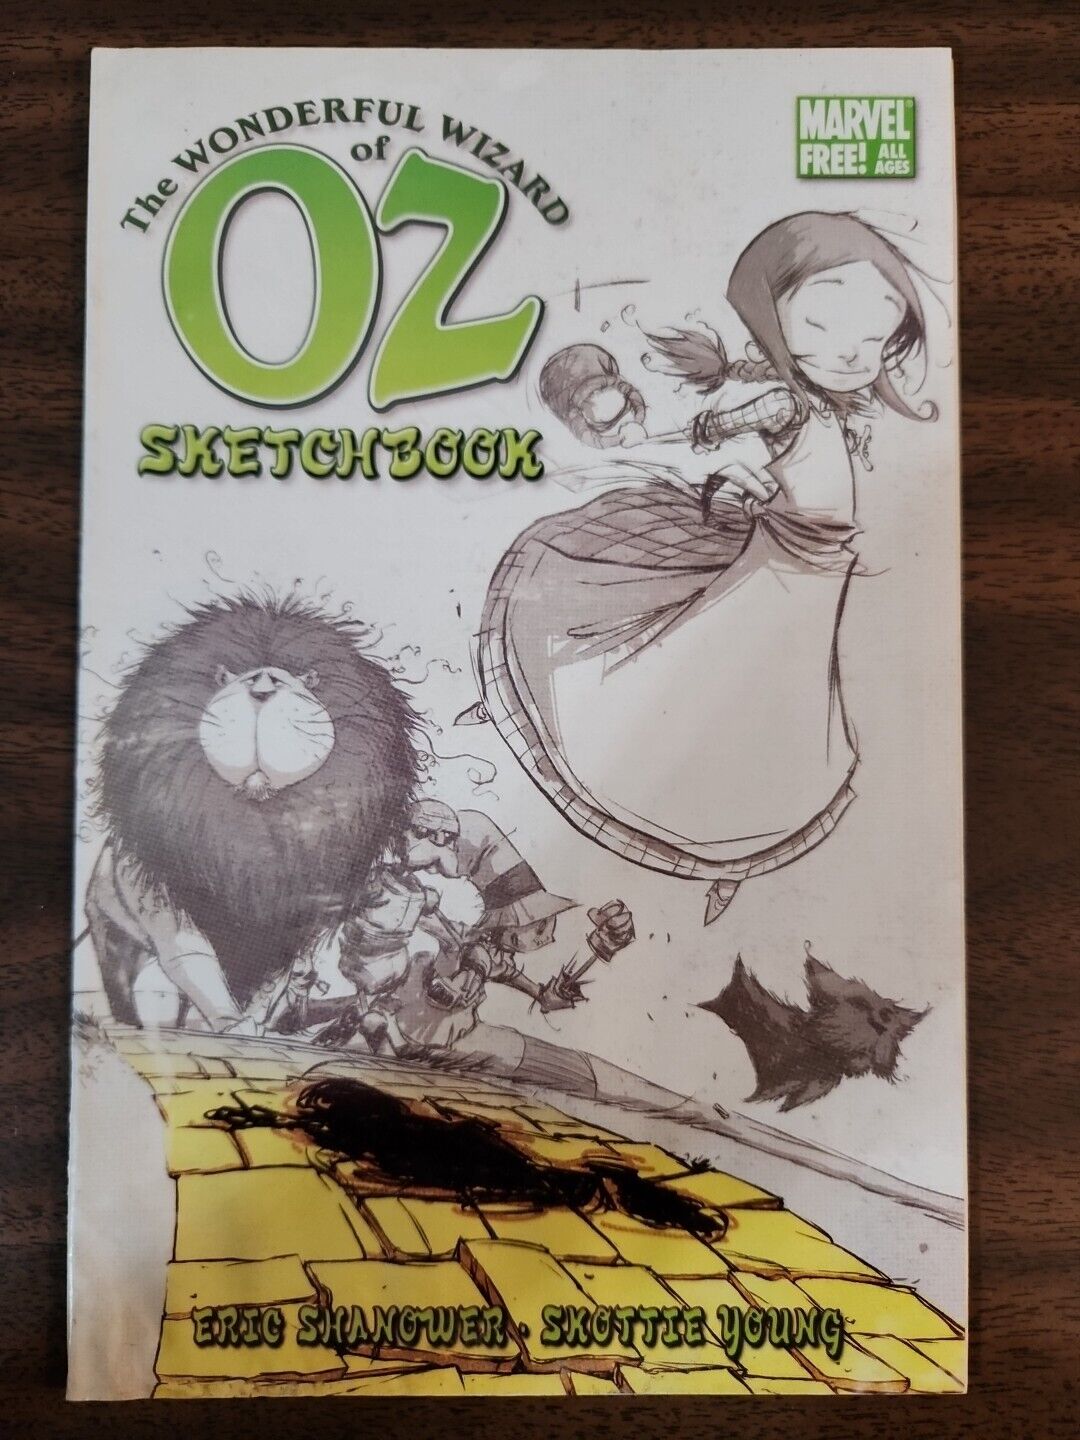 Wonderful Wizard Of Oz Sketchbook #1 Marvel Comics 2008, SKOTTIE YOUNG Cover